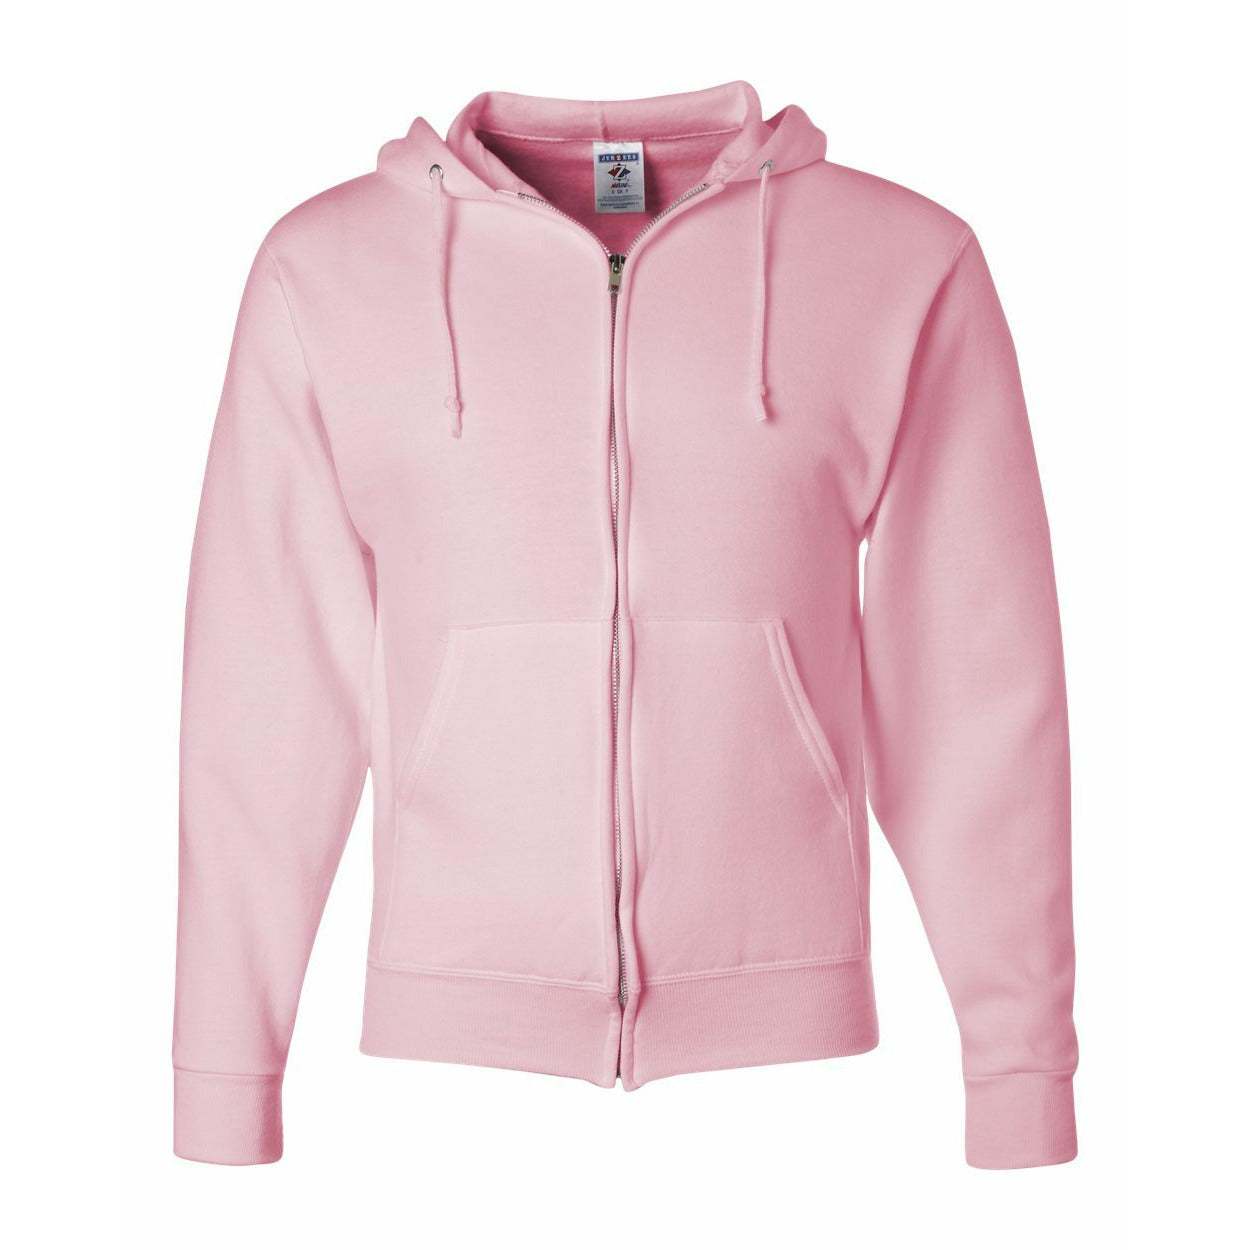 993MR | Unisex NuBlend Full-Zip Hooded Sweatshirt